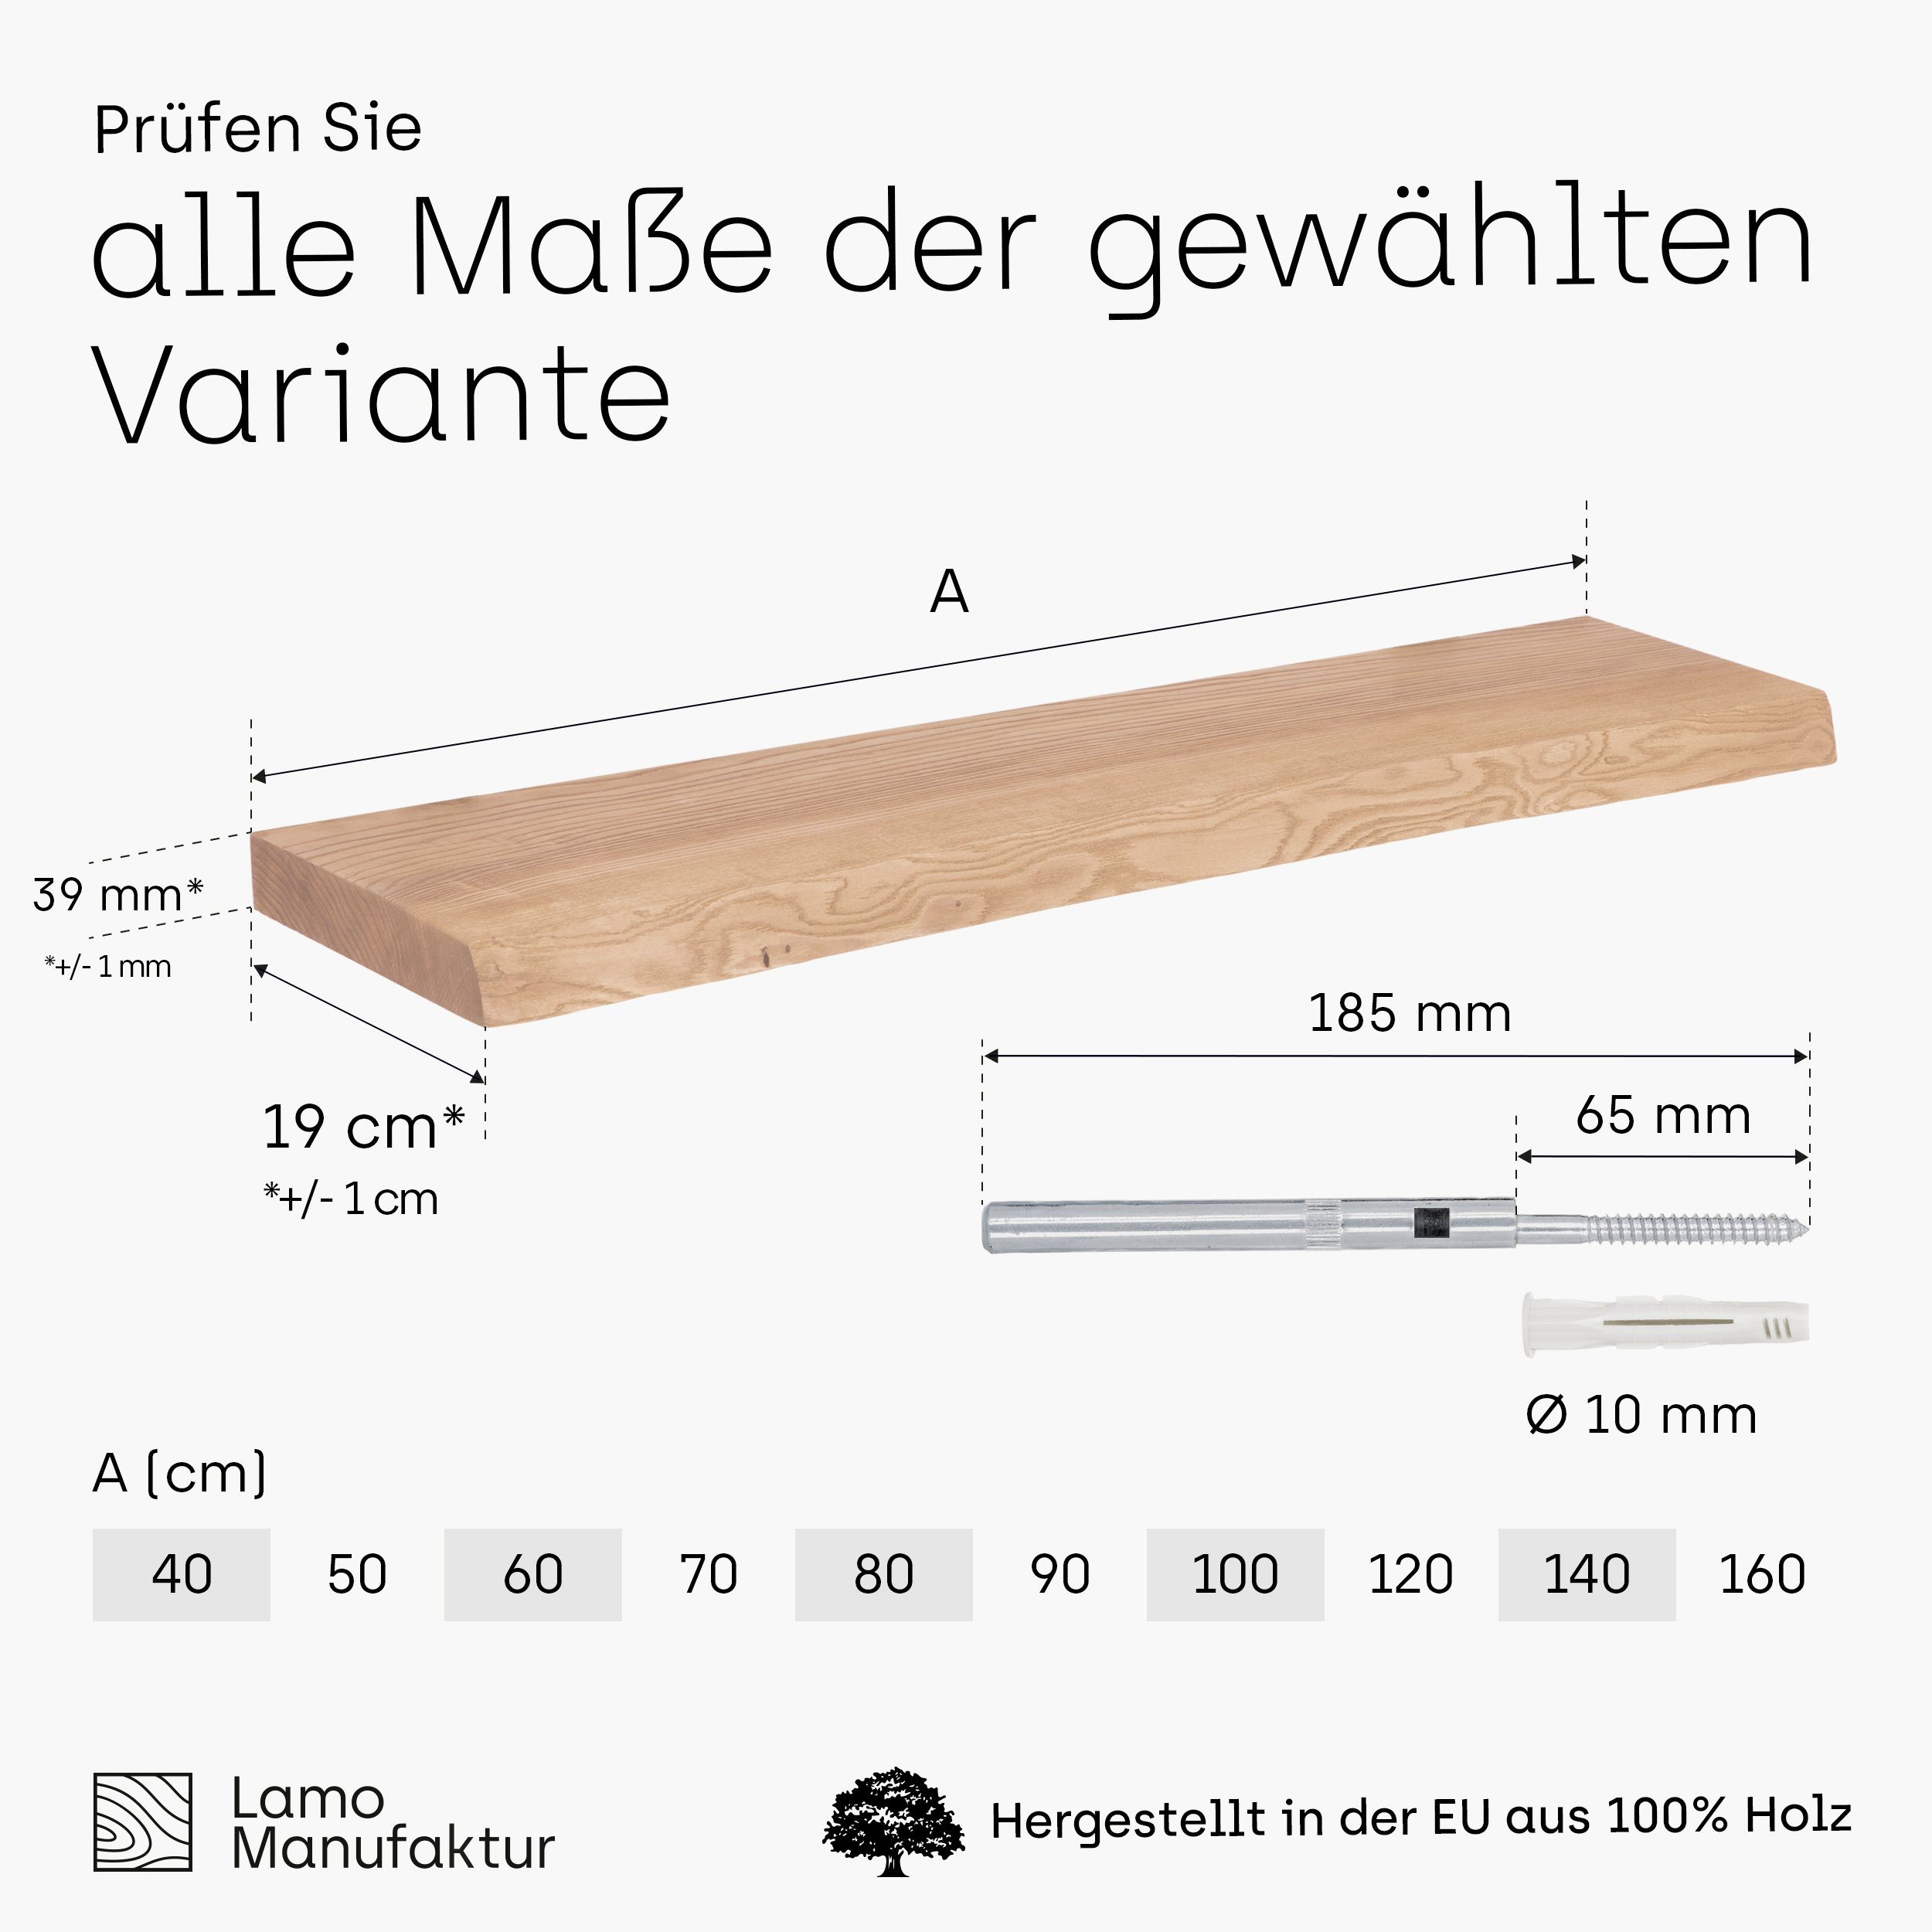 Roh stake Wandregal Massivholzplatte 40mm mit Würth LAMO Manufaktur Dübel, Invisible Komplett-Set,